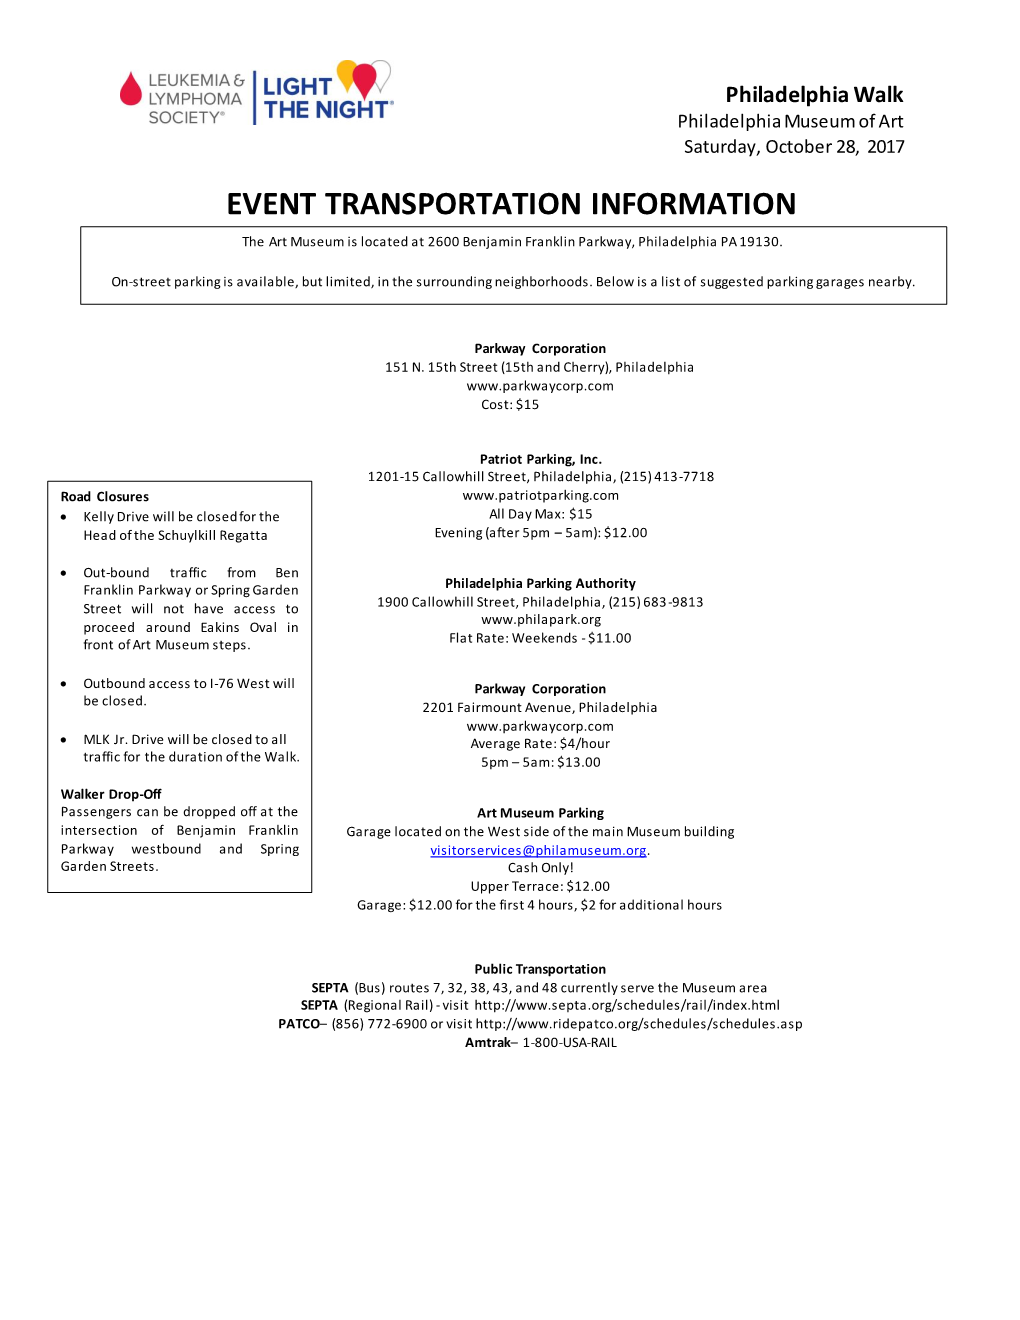 Event Transportation Information